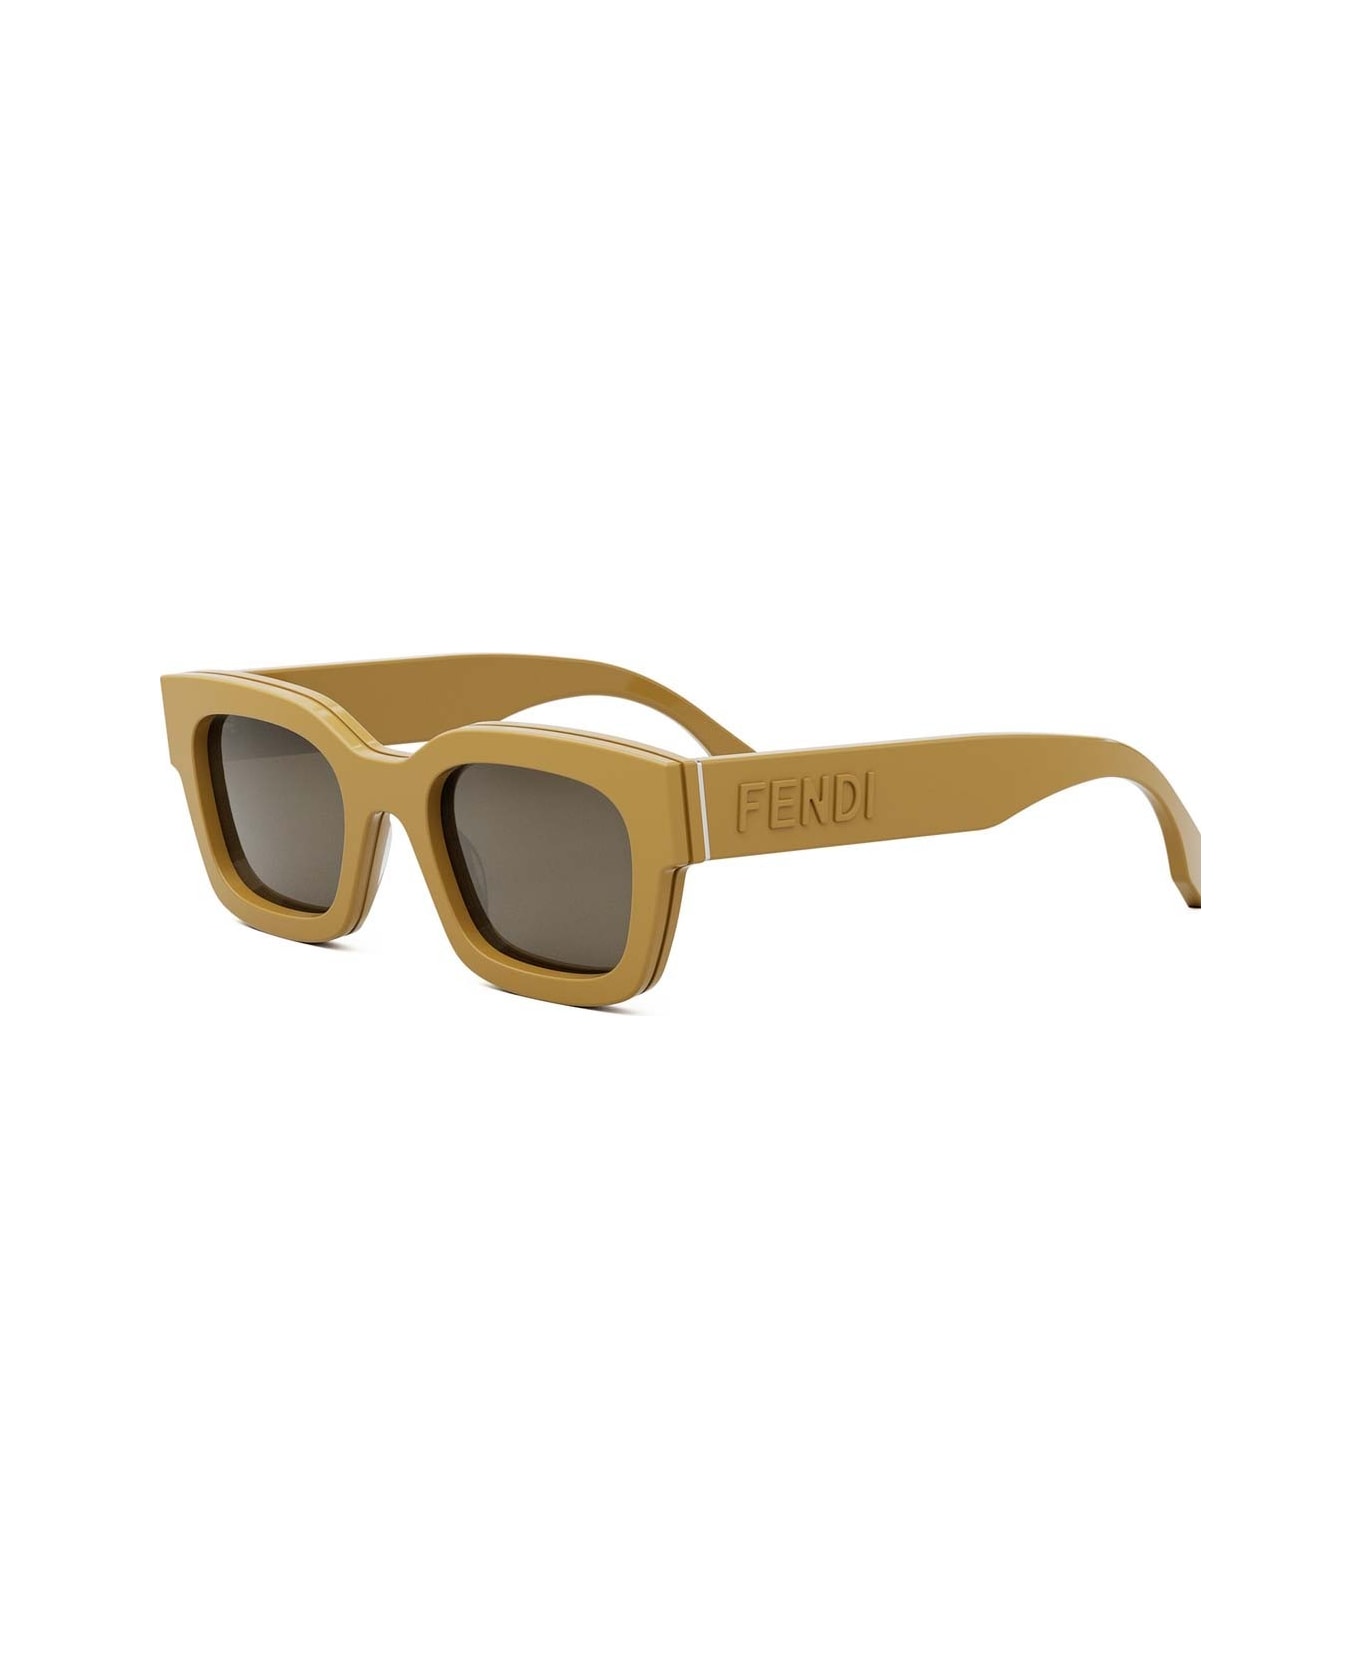 Fendi Eyewear Sunglasses - Giallo/Grigio